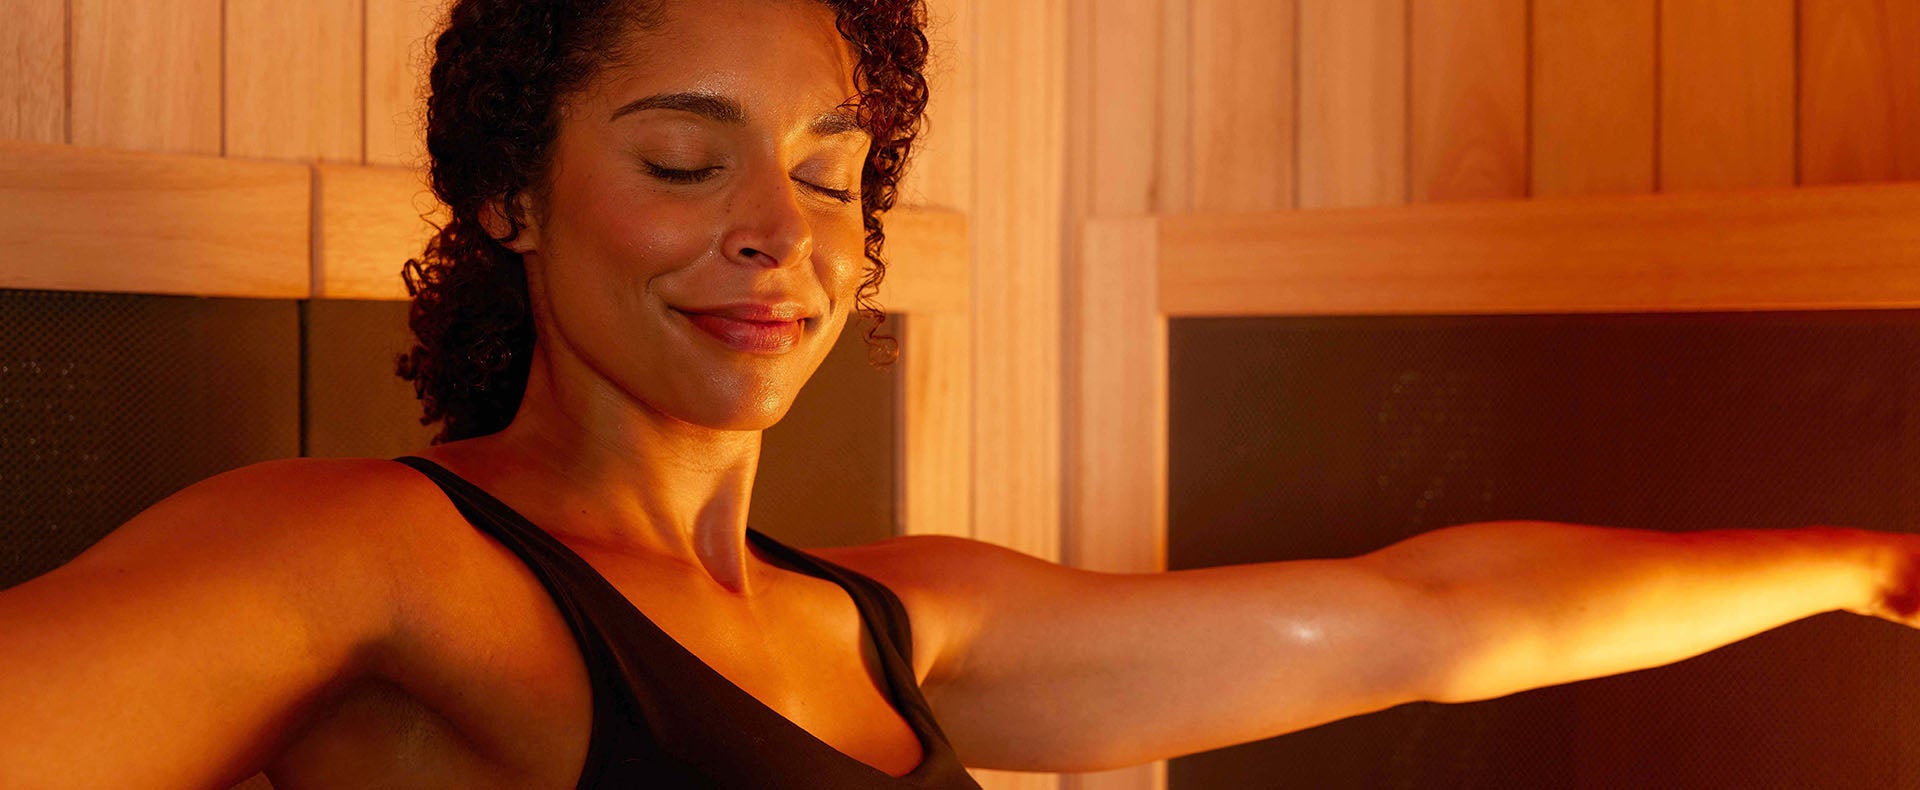 Woman enjoying stretching arms in sauna